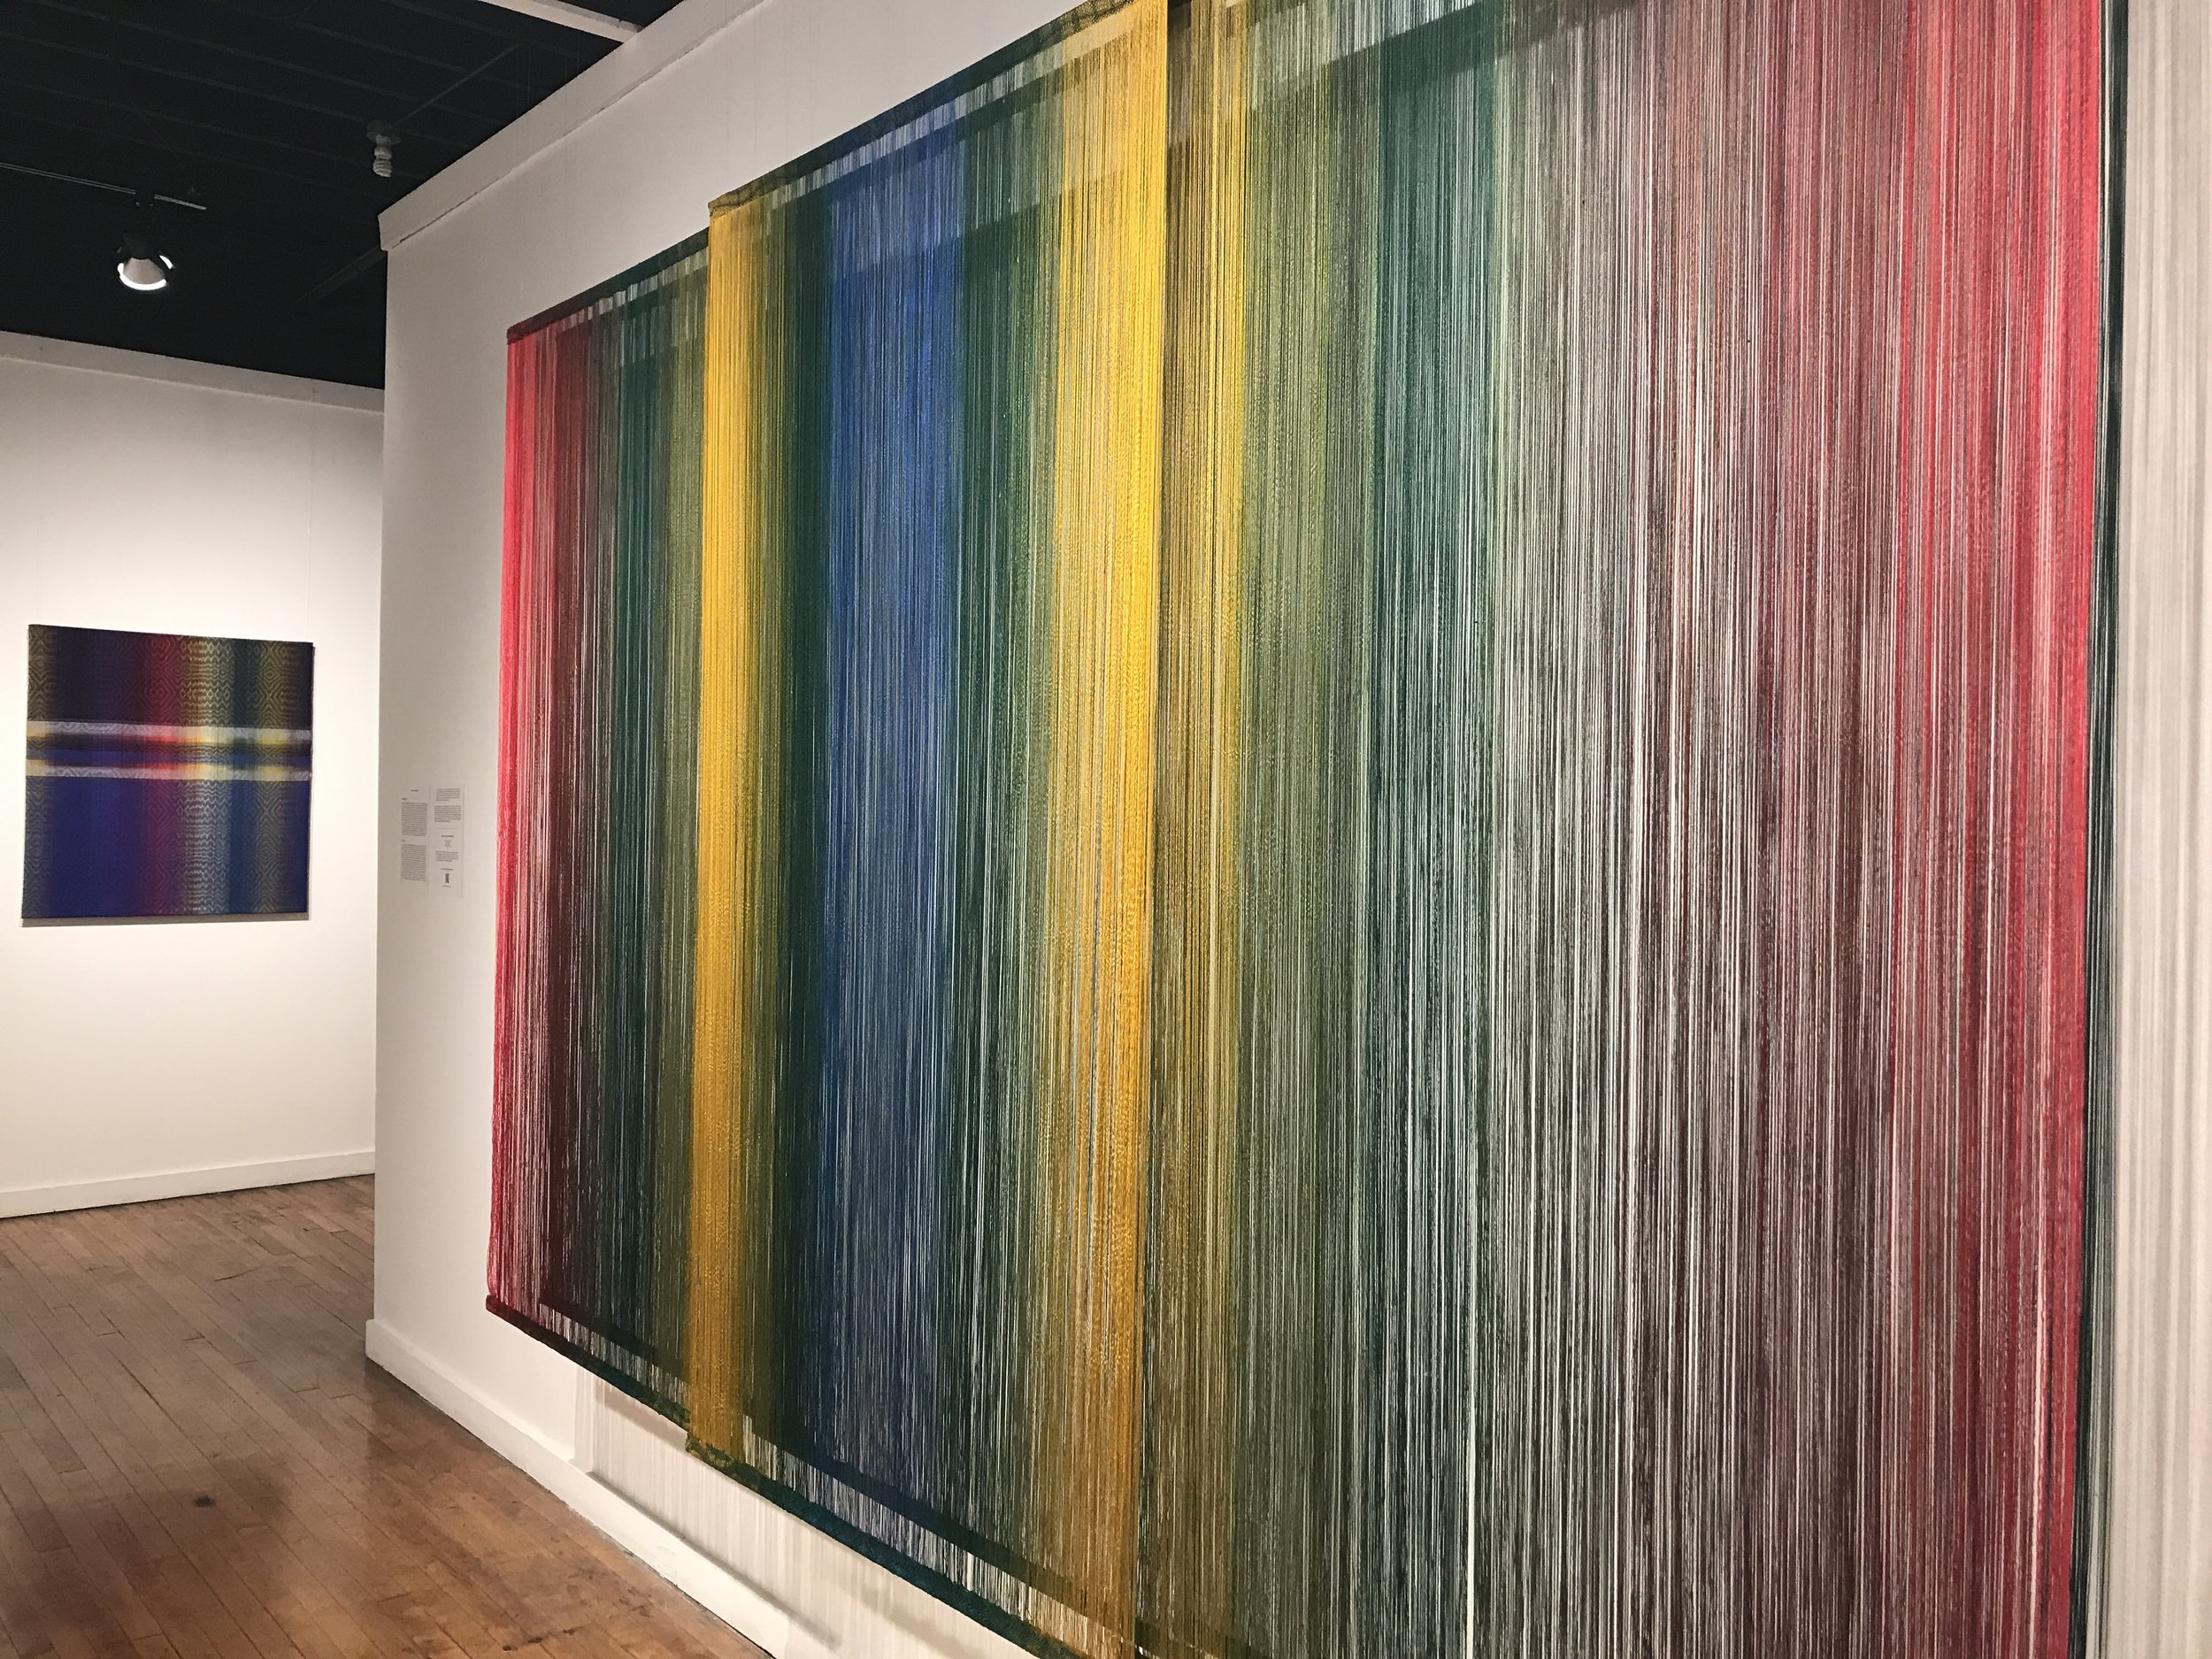  SANCTUARIES; A Print and Sound Installation by Kristine Barrett with Woven Textiles by Debbie Barrett-Jones   Leedy-Voulkos Art Center   Kansas City, MO 